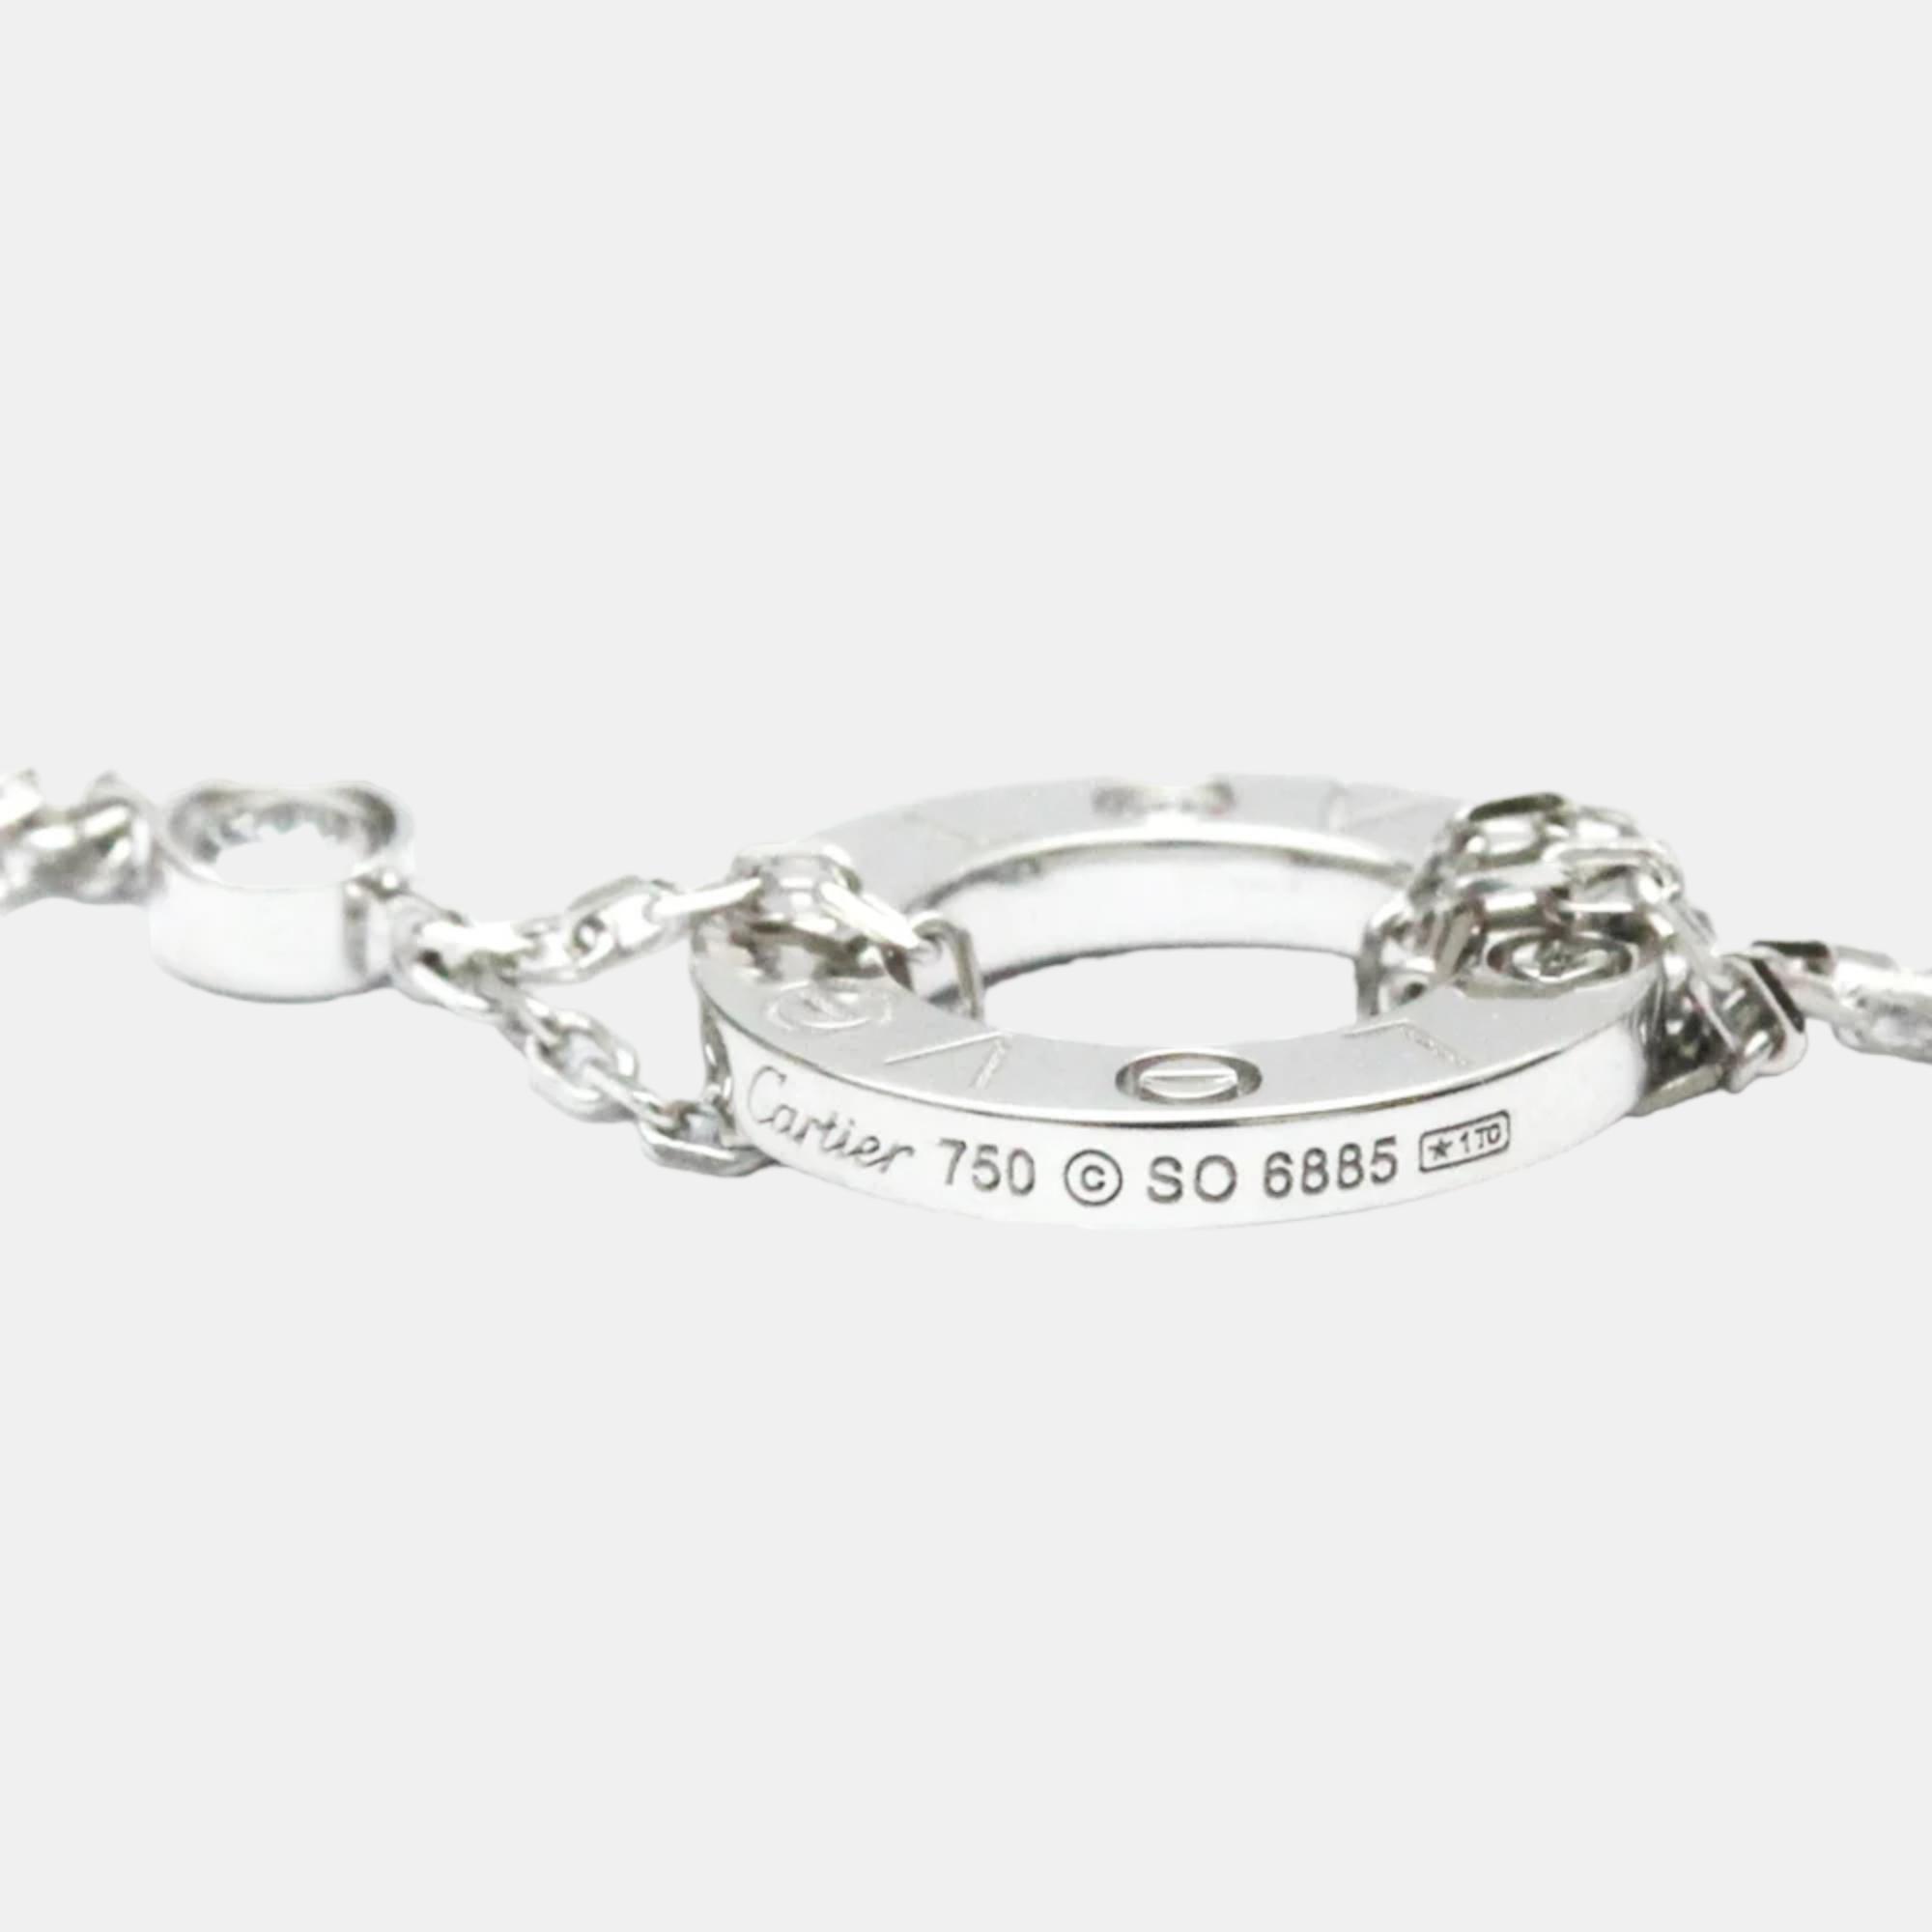 Cartier Love Charm 18K White Gold Diamond Bracelet 16